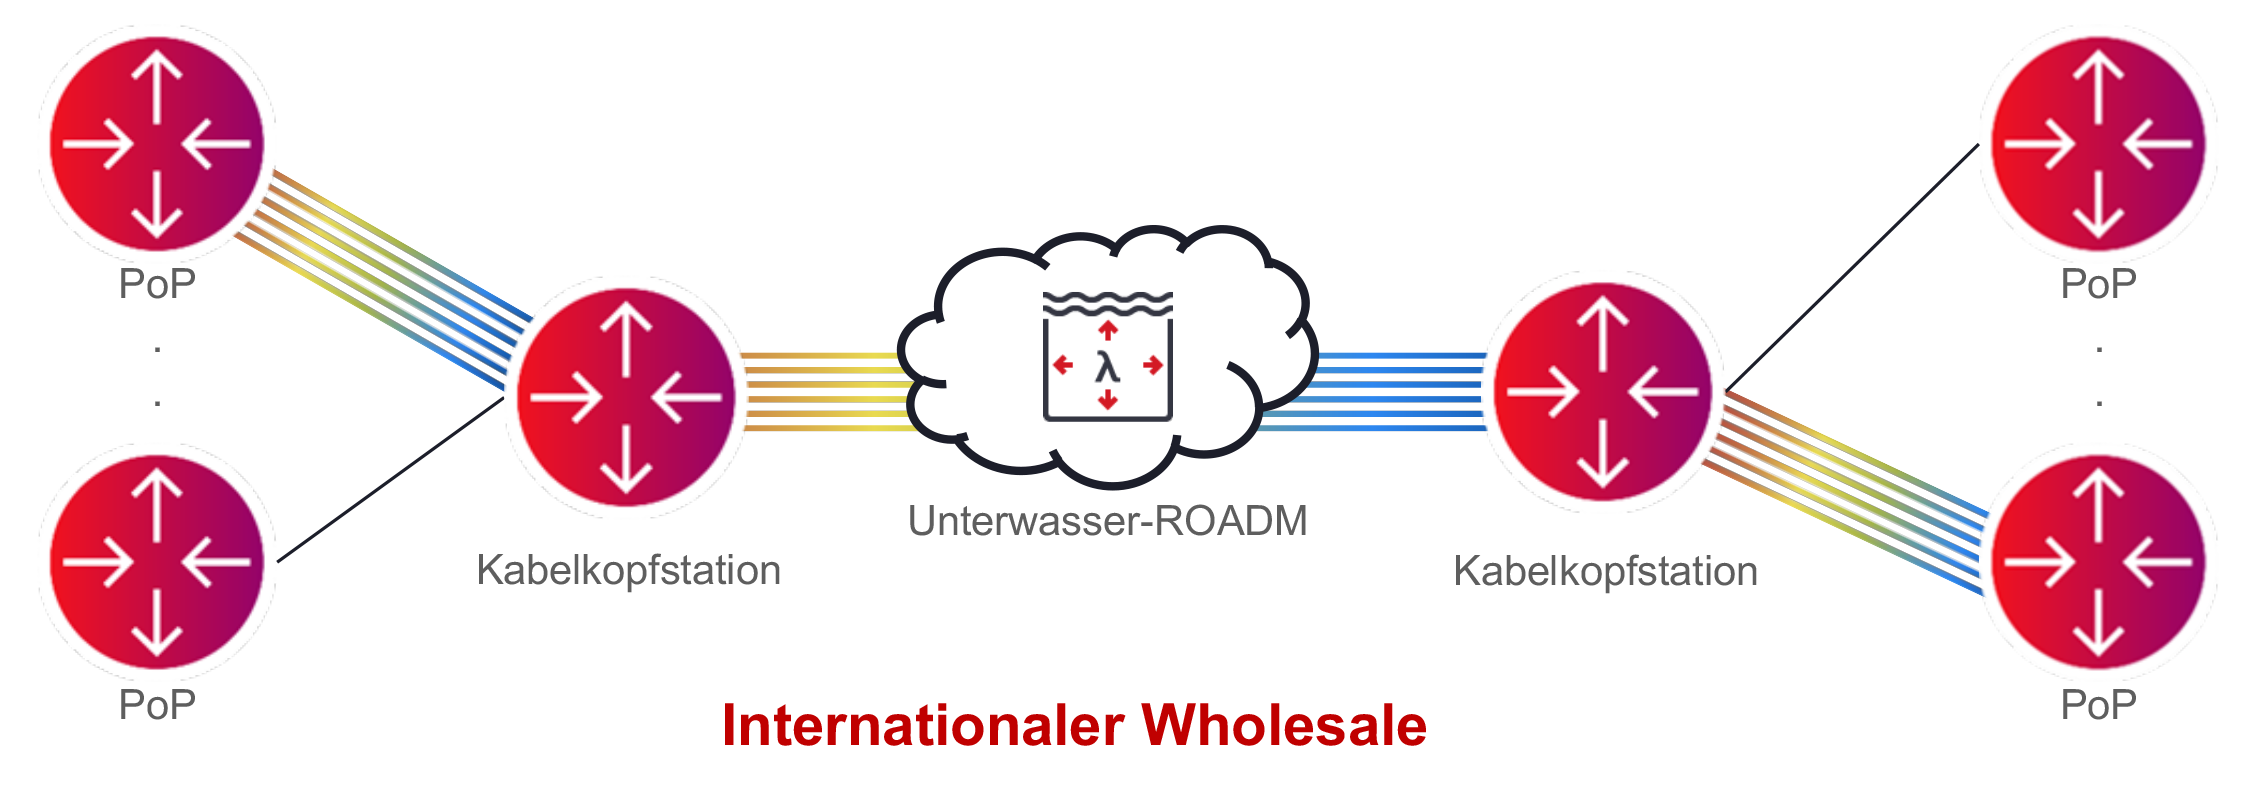 Figure 4_International Wholesaler Network Illustration